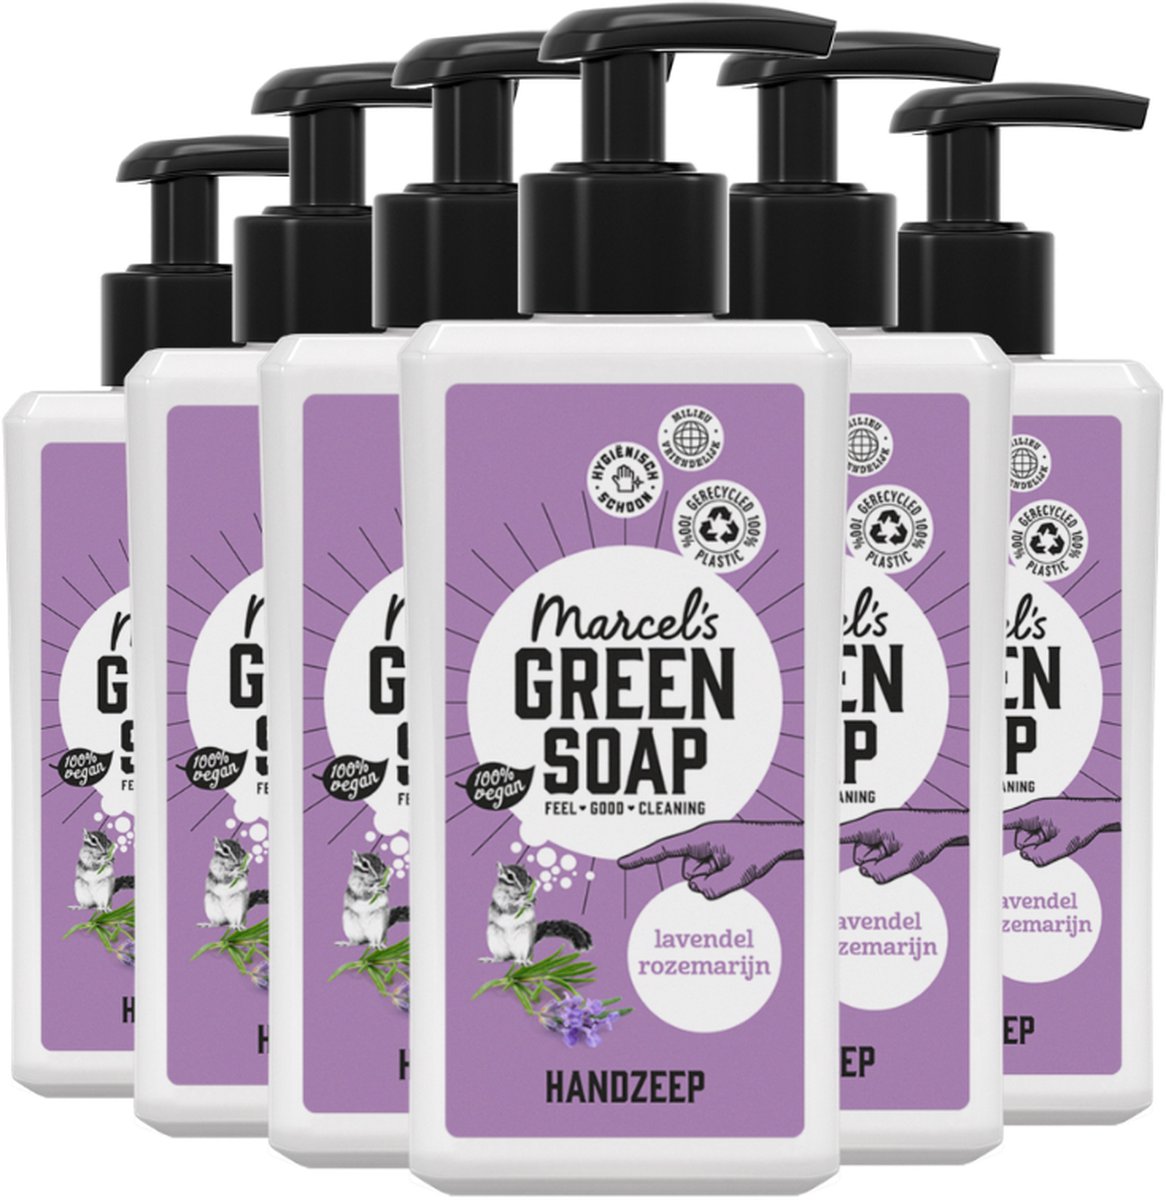 Marcel's Green Soap Handzeep Lavendel & Rosemarijn - 6 x 250 ml